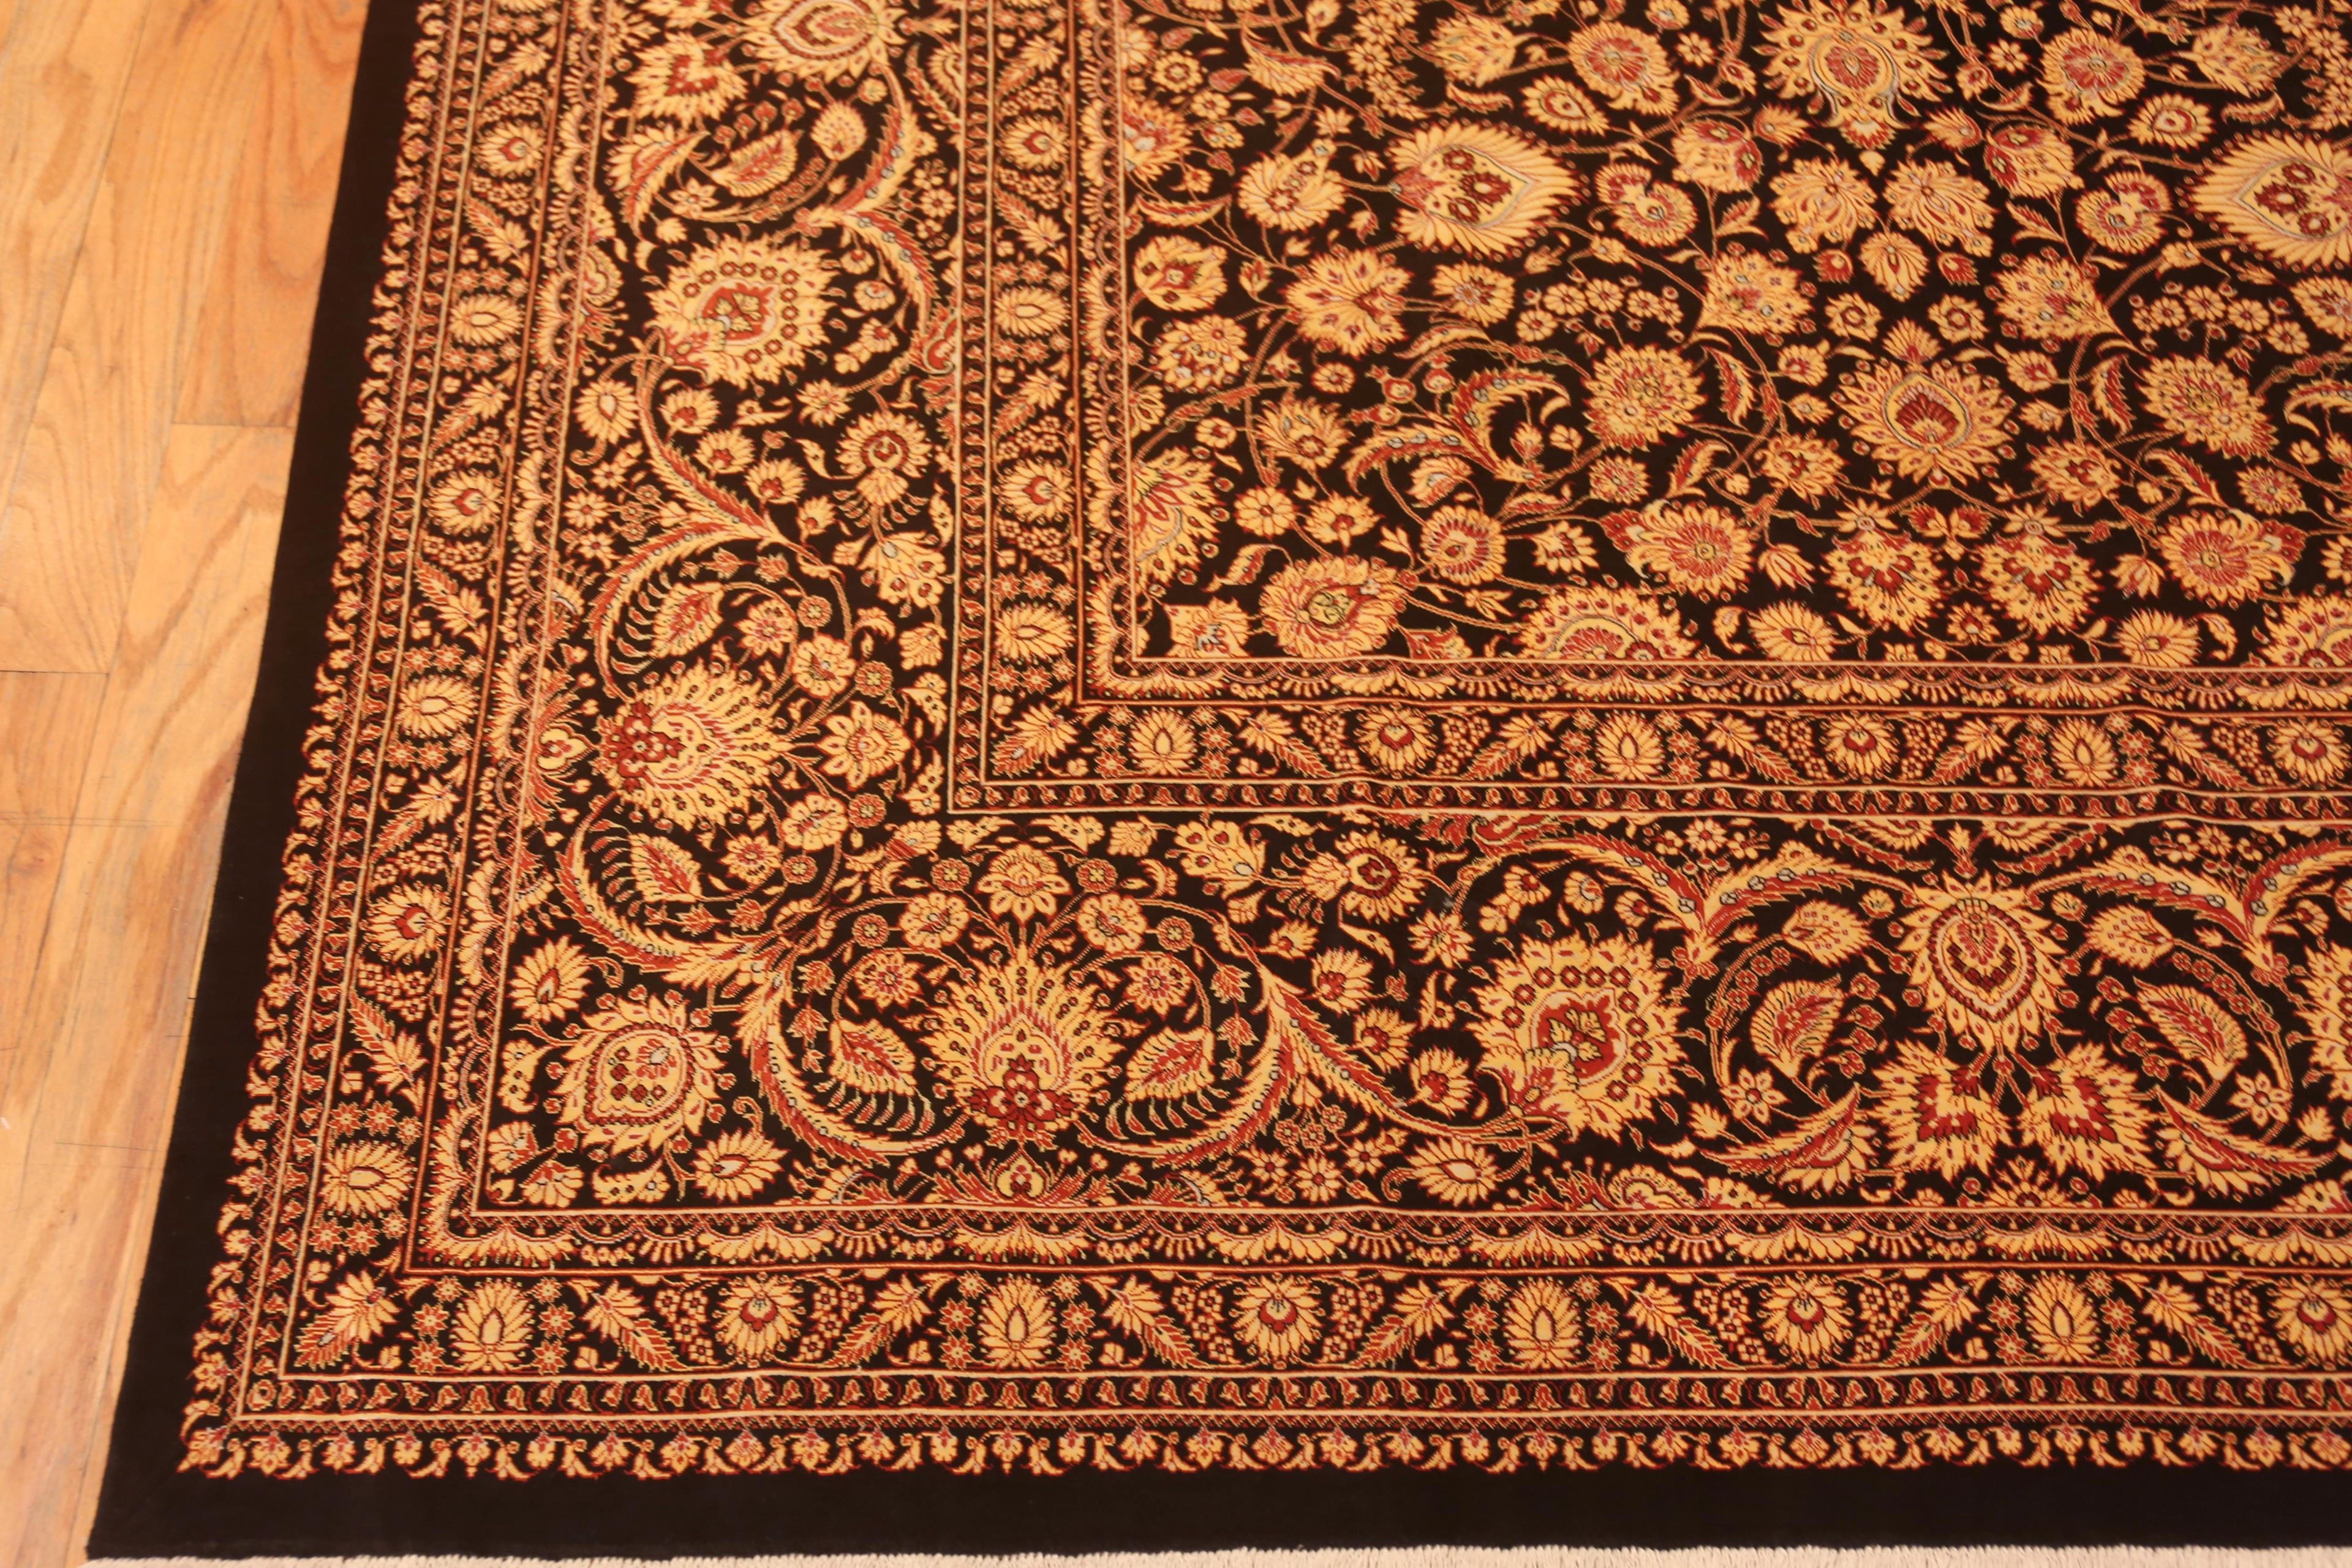 Breathtaking Fine Traditional Vintage Persian Silk Qum Luxury Rug 9'10